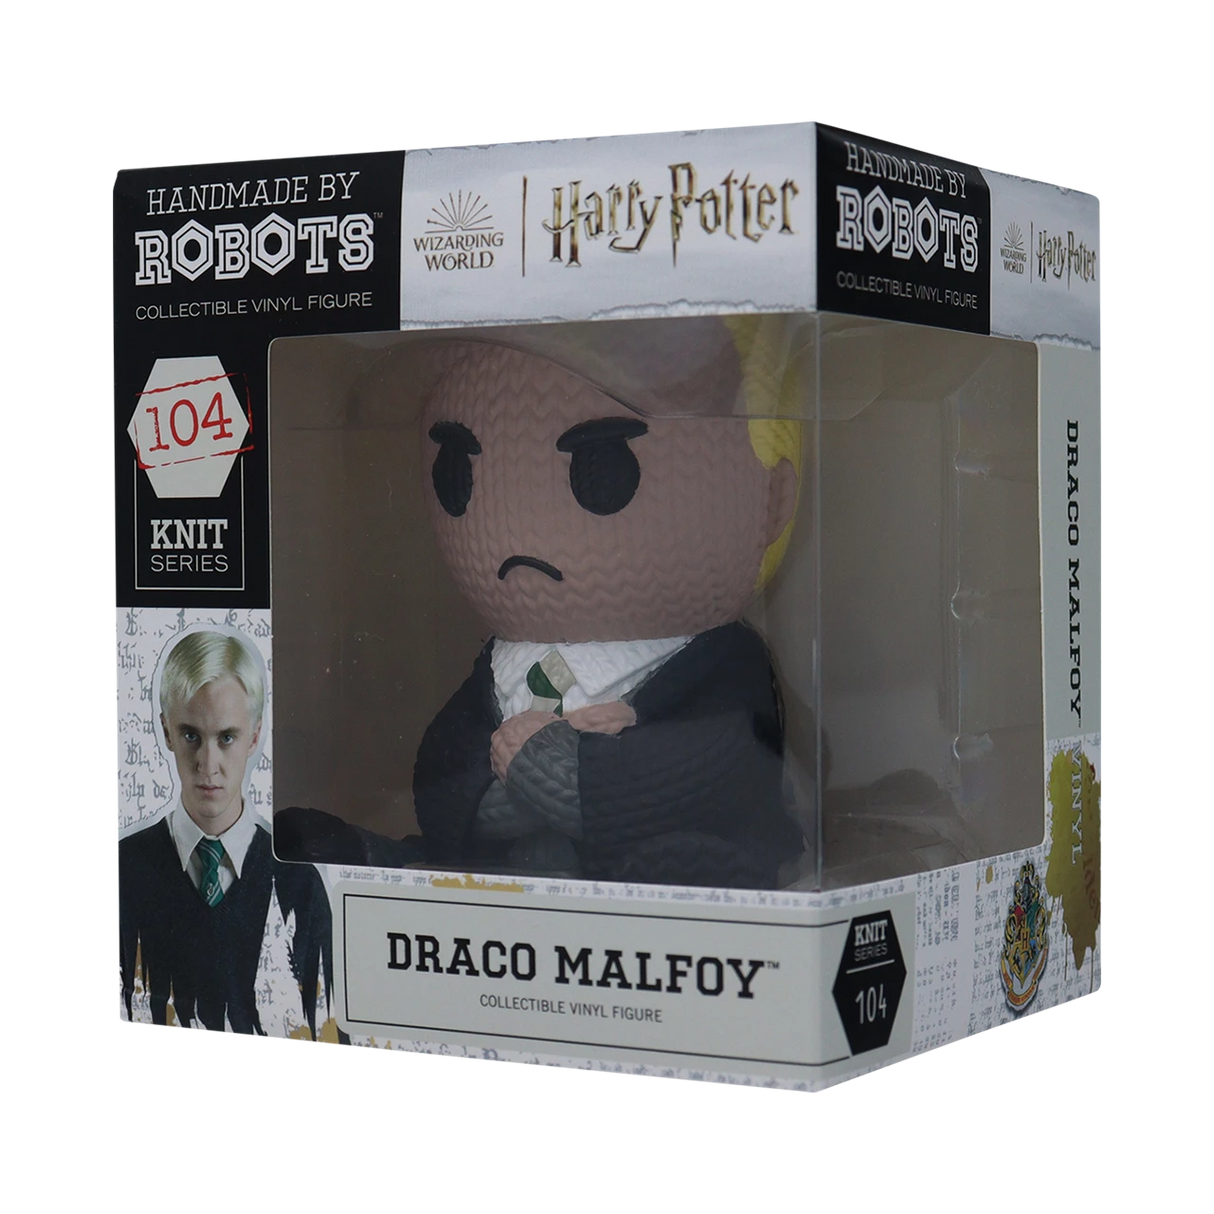 Handmade by Robots | Harry Potter | Draco Malfoy Vinyl Figure | Knit Series #104